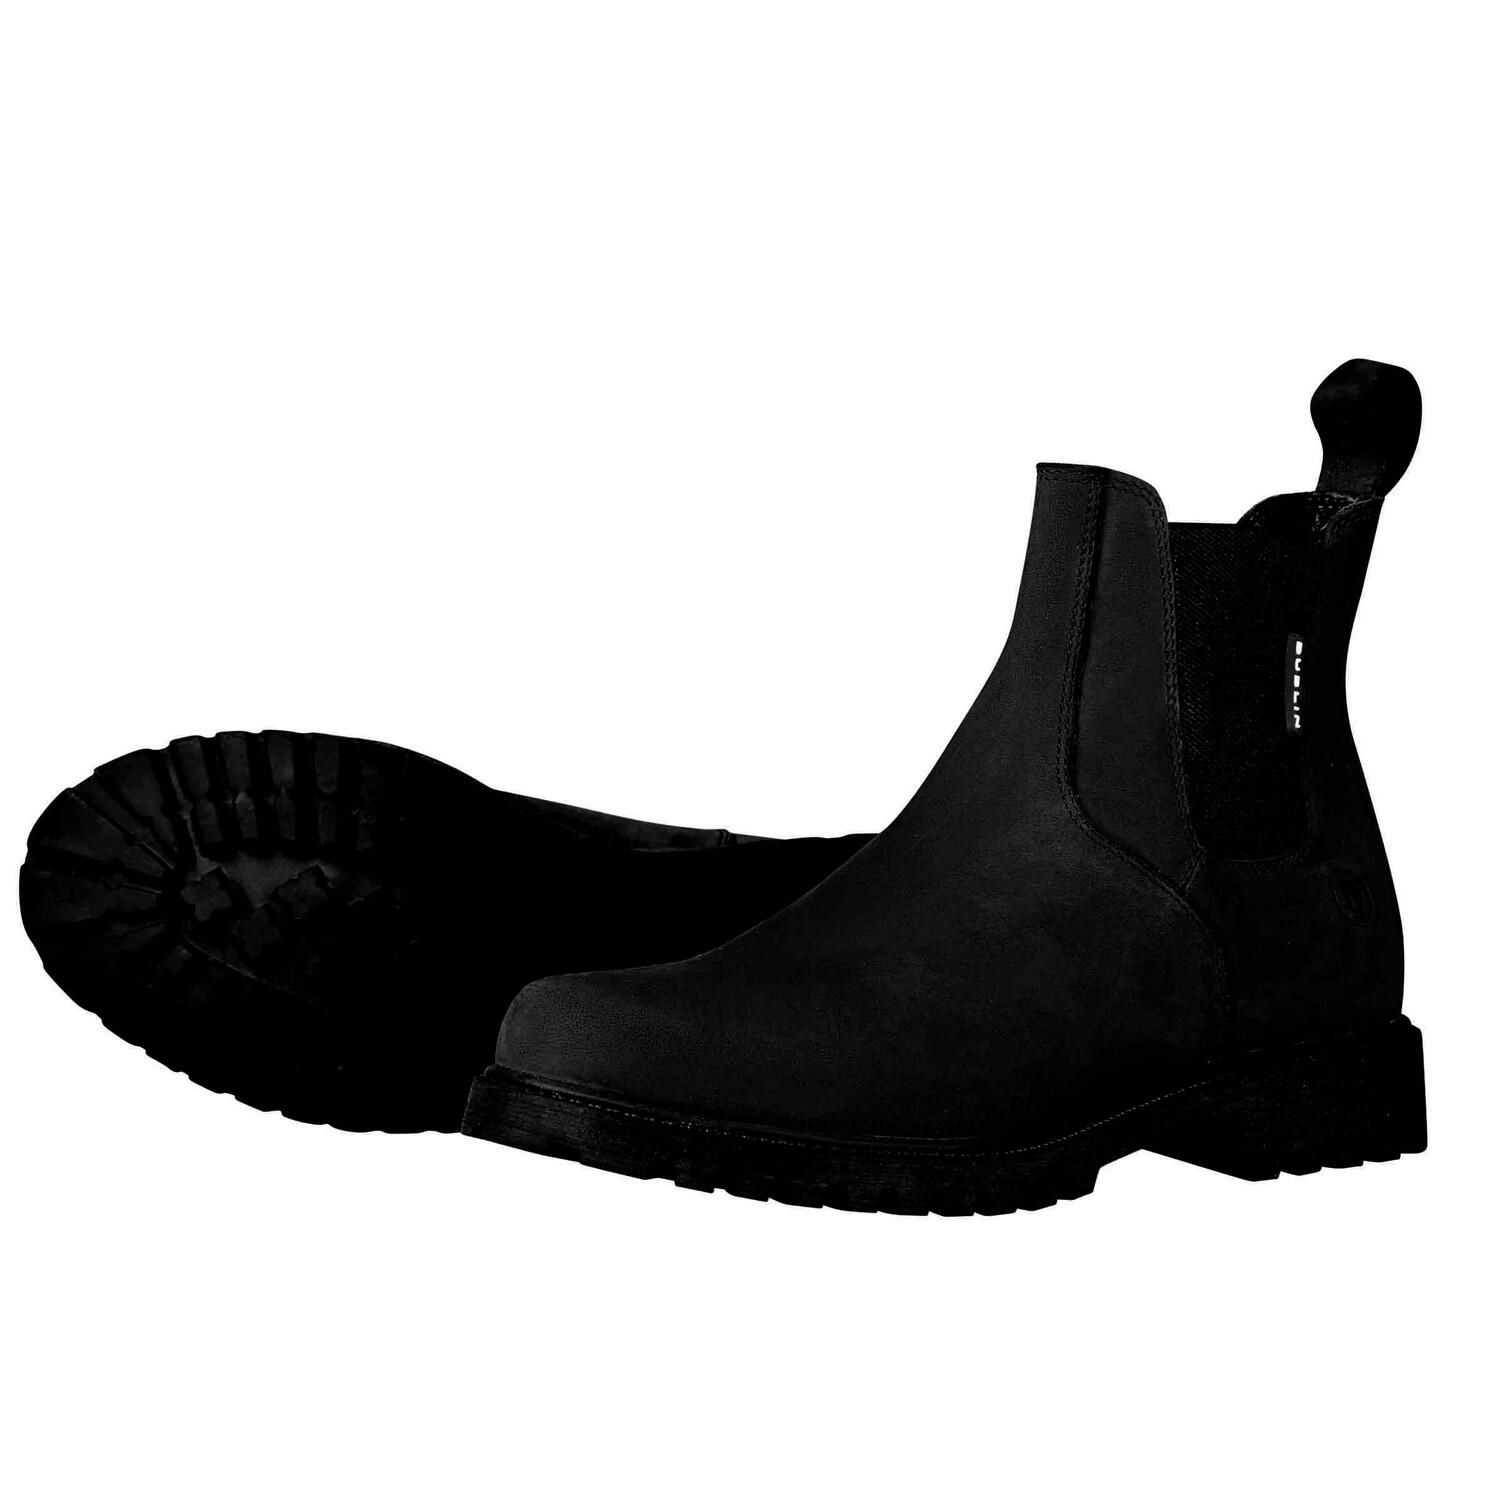 Mens Venturer Leather Boots III (Black) 2/3